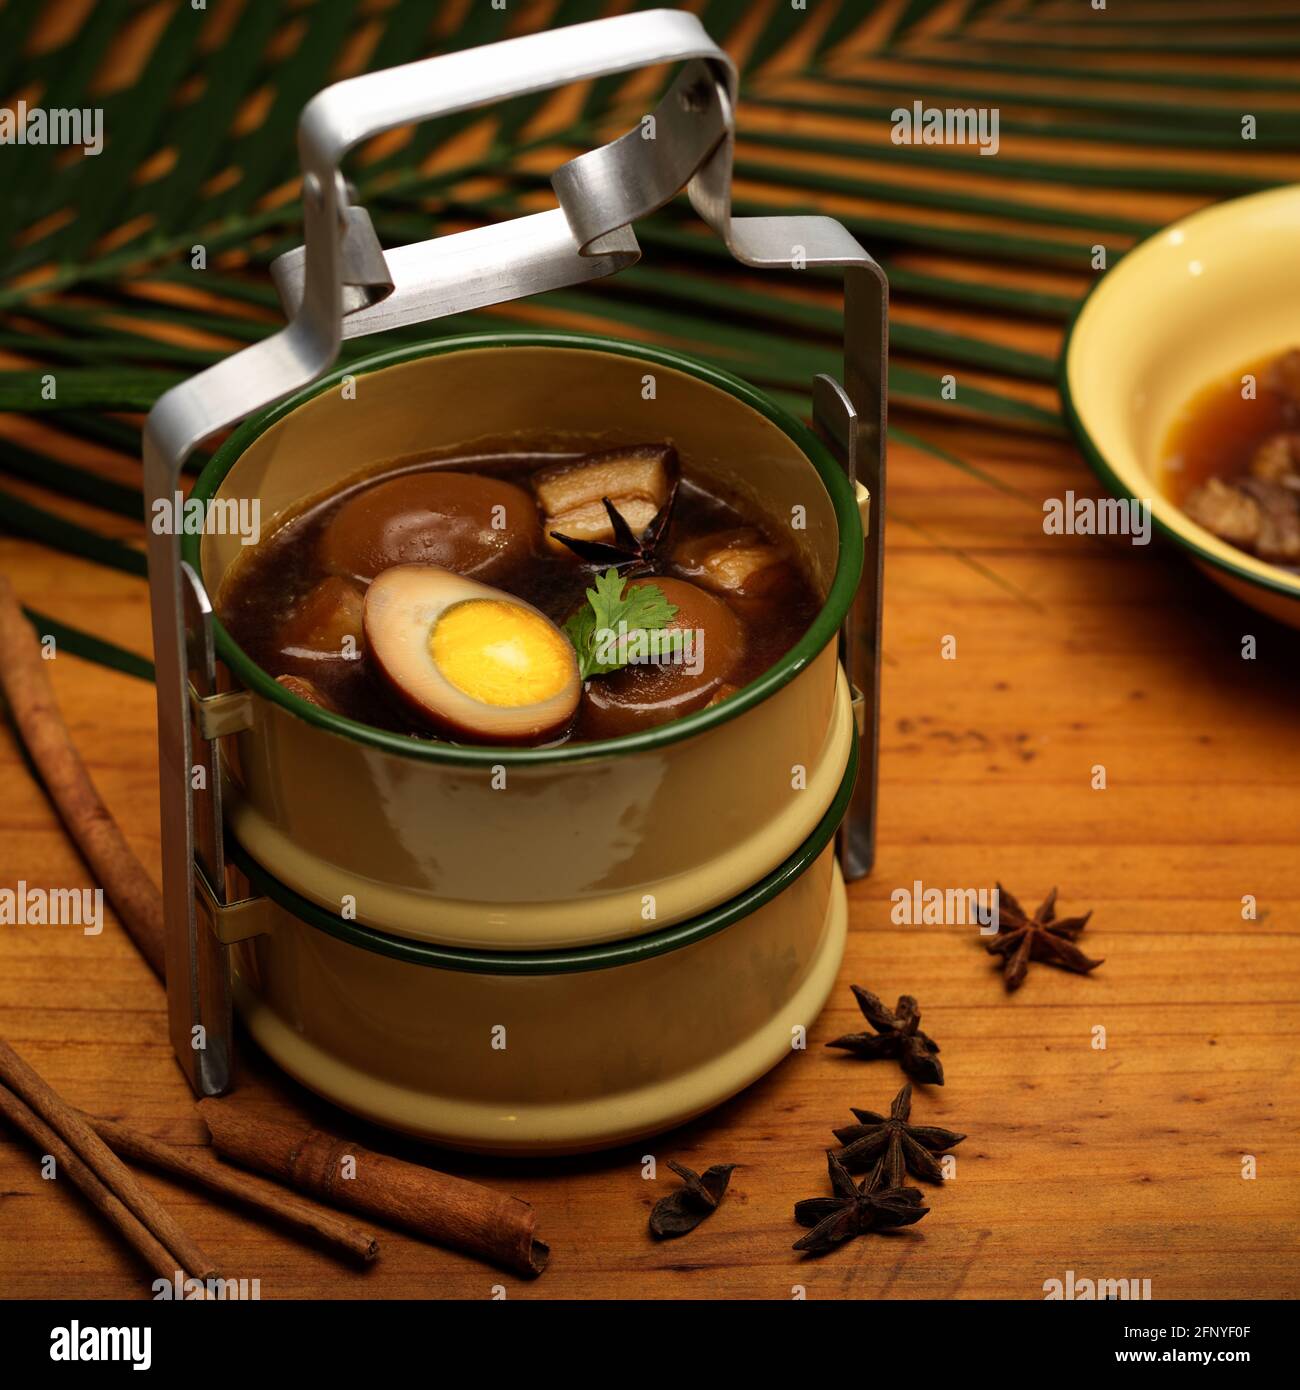 Portador de alimentos fotografías e imágenes de alta resolución - Alamy